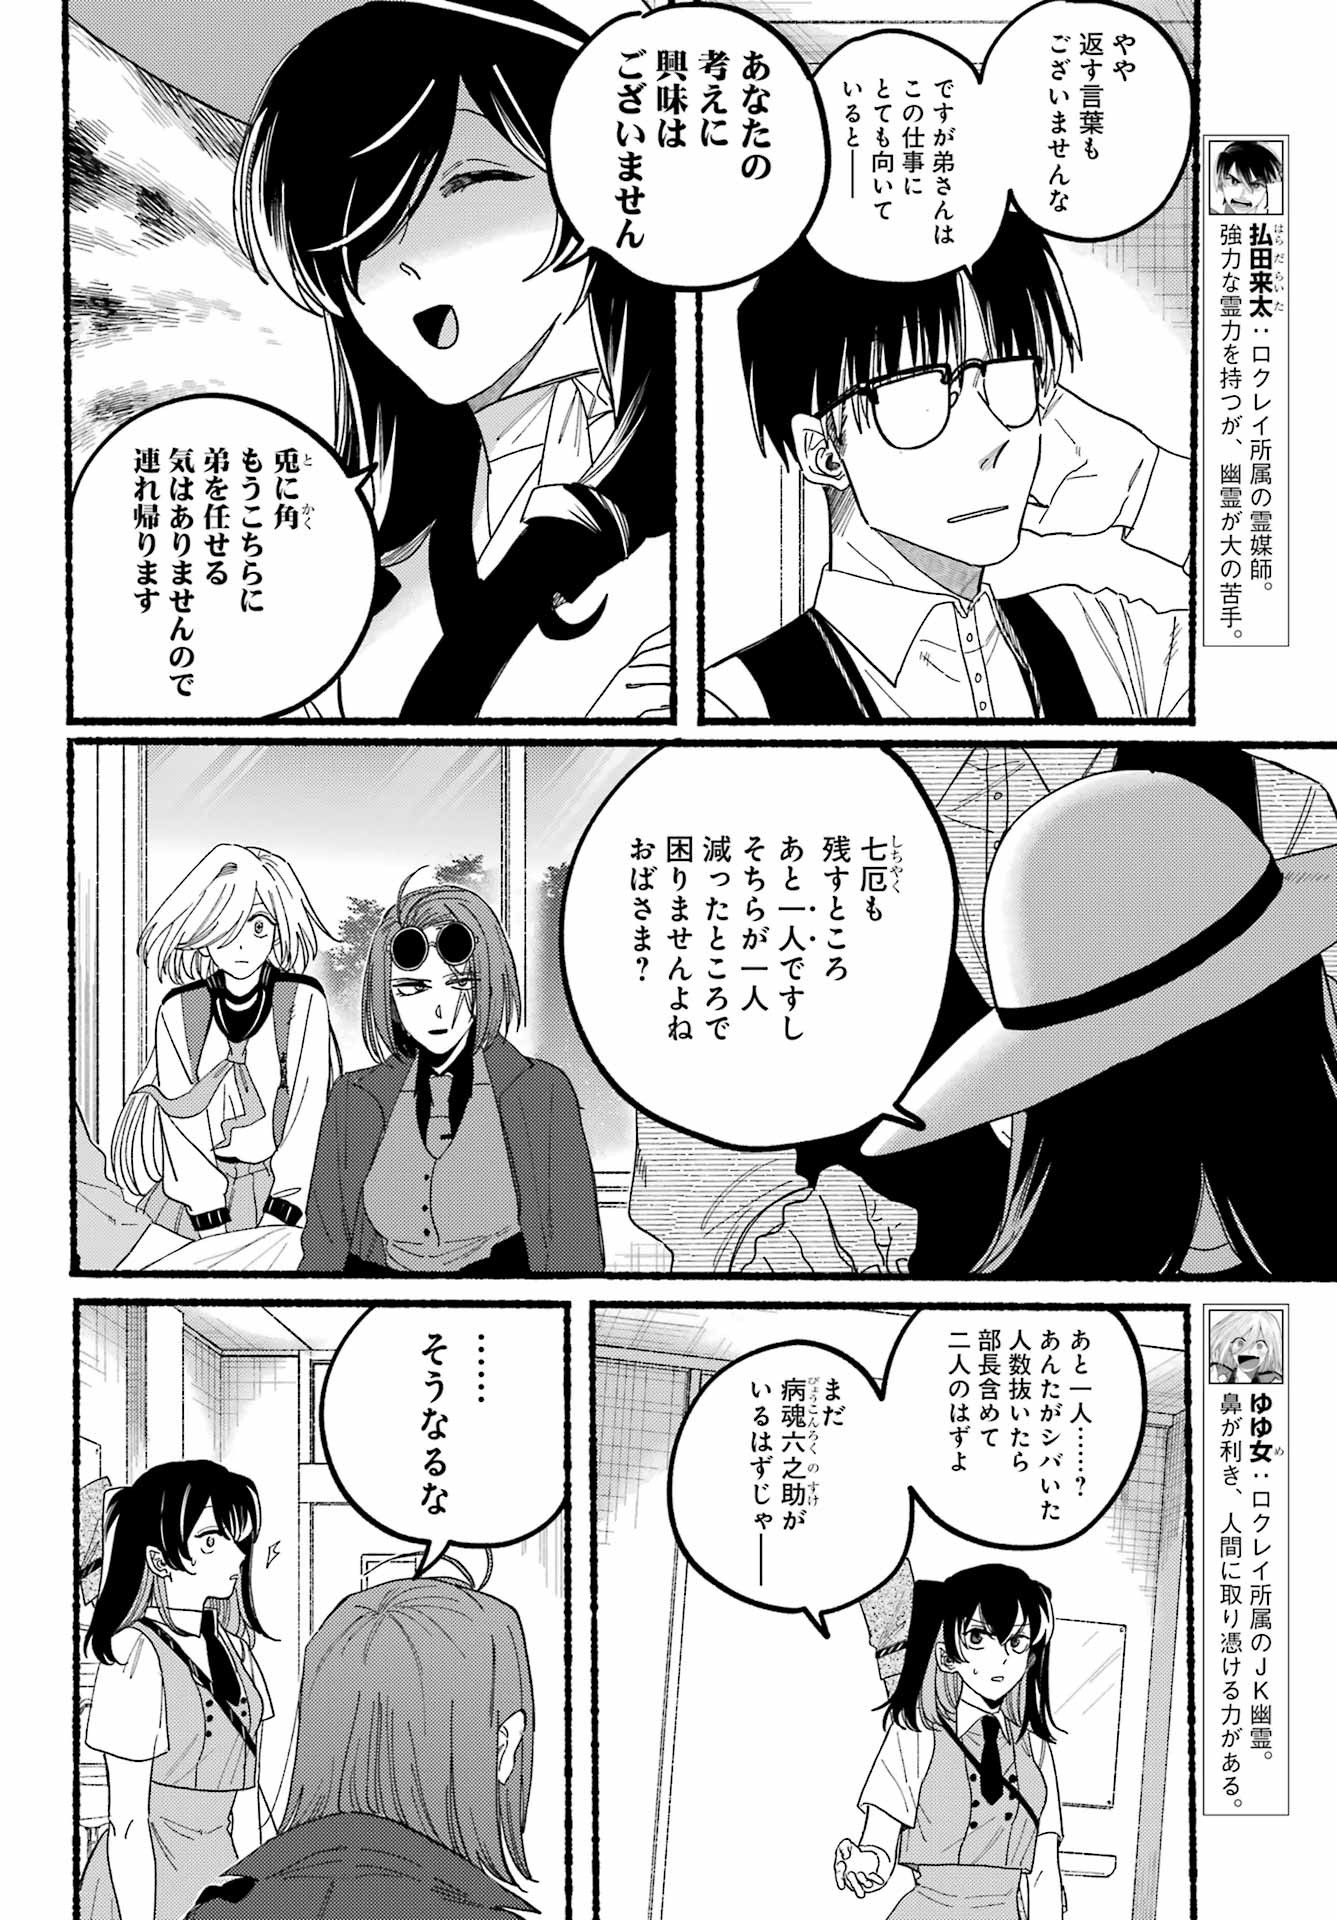 Rokurei - Tenseishi Rinne Kuyakusho Dairokkanbu Joreika Katsudouki - Chapter 15 - Page 4